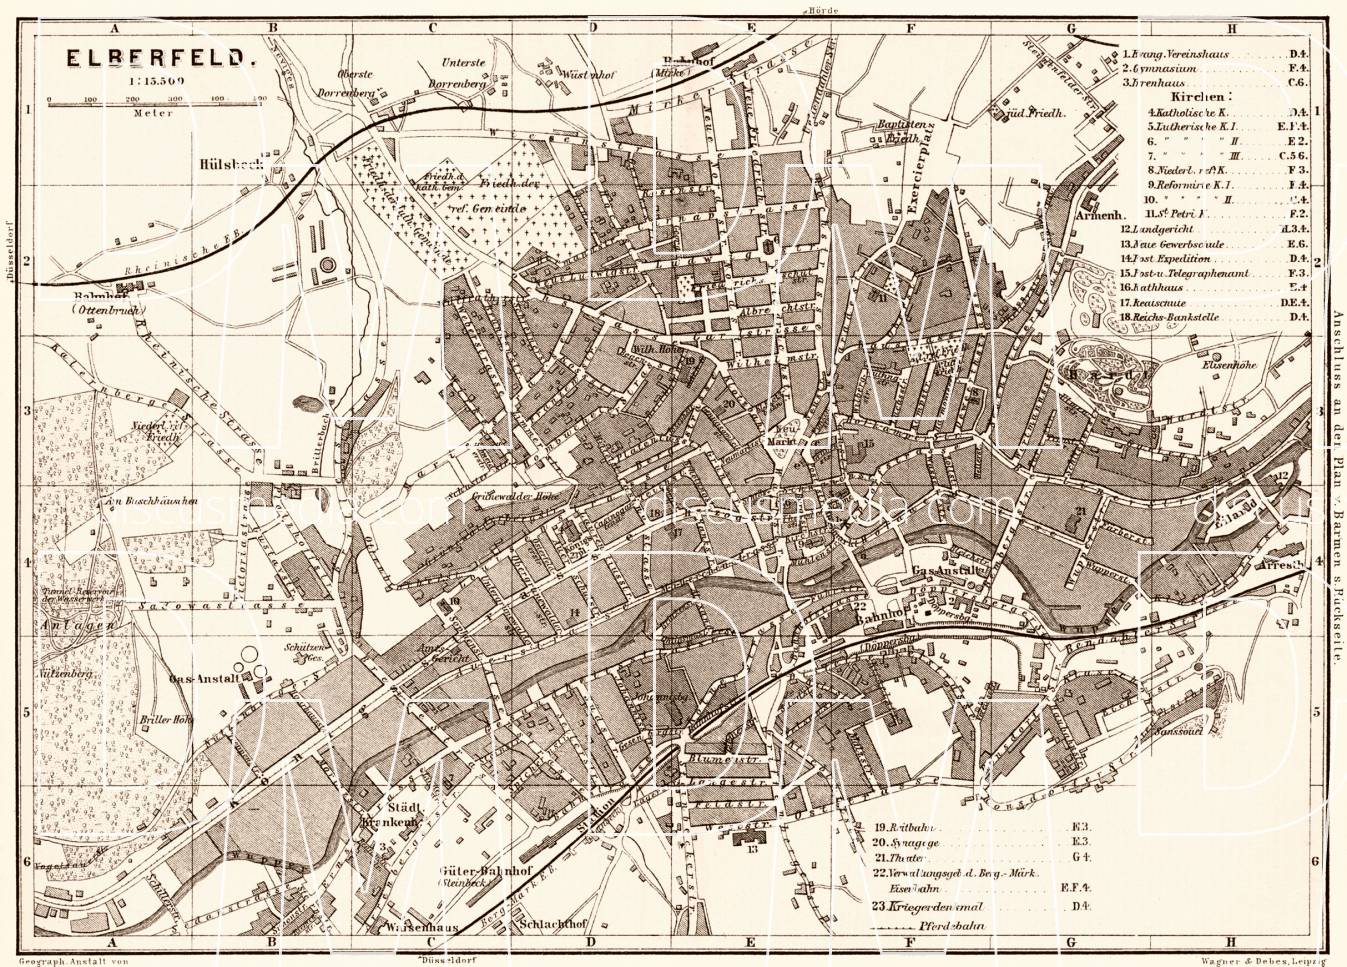 Old map of Elberfeld in 1887. Buy vintage map replica poster print or